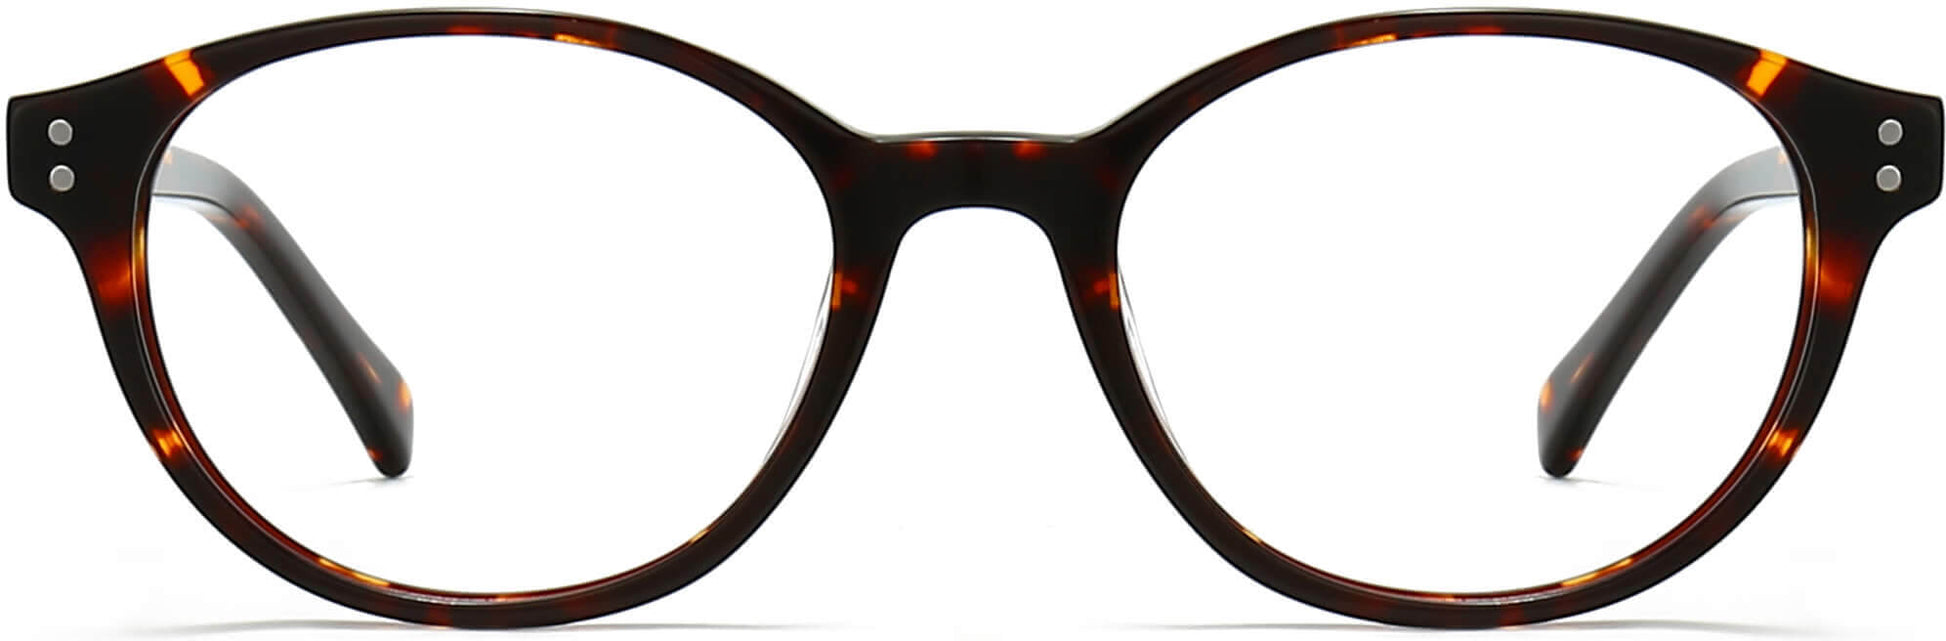 Scarlett Round Tortoise Eyeglasses from ANRRI, front view